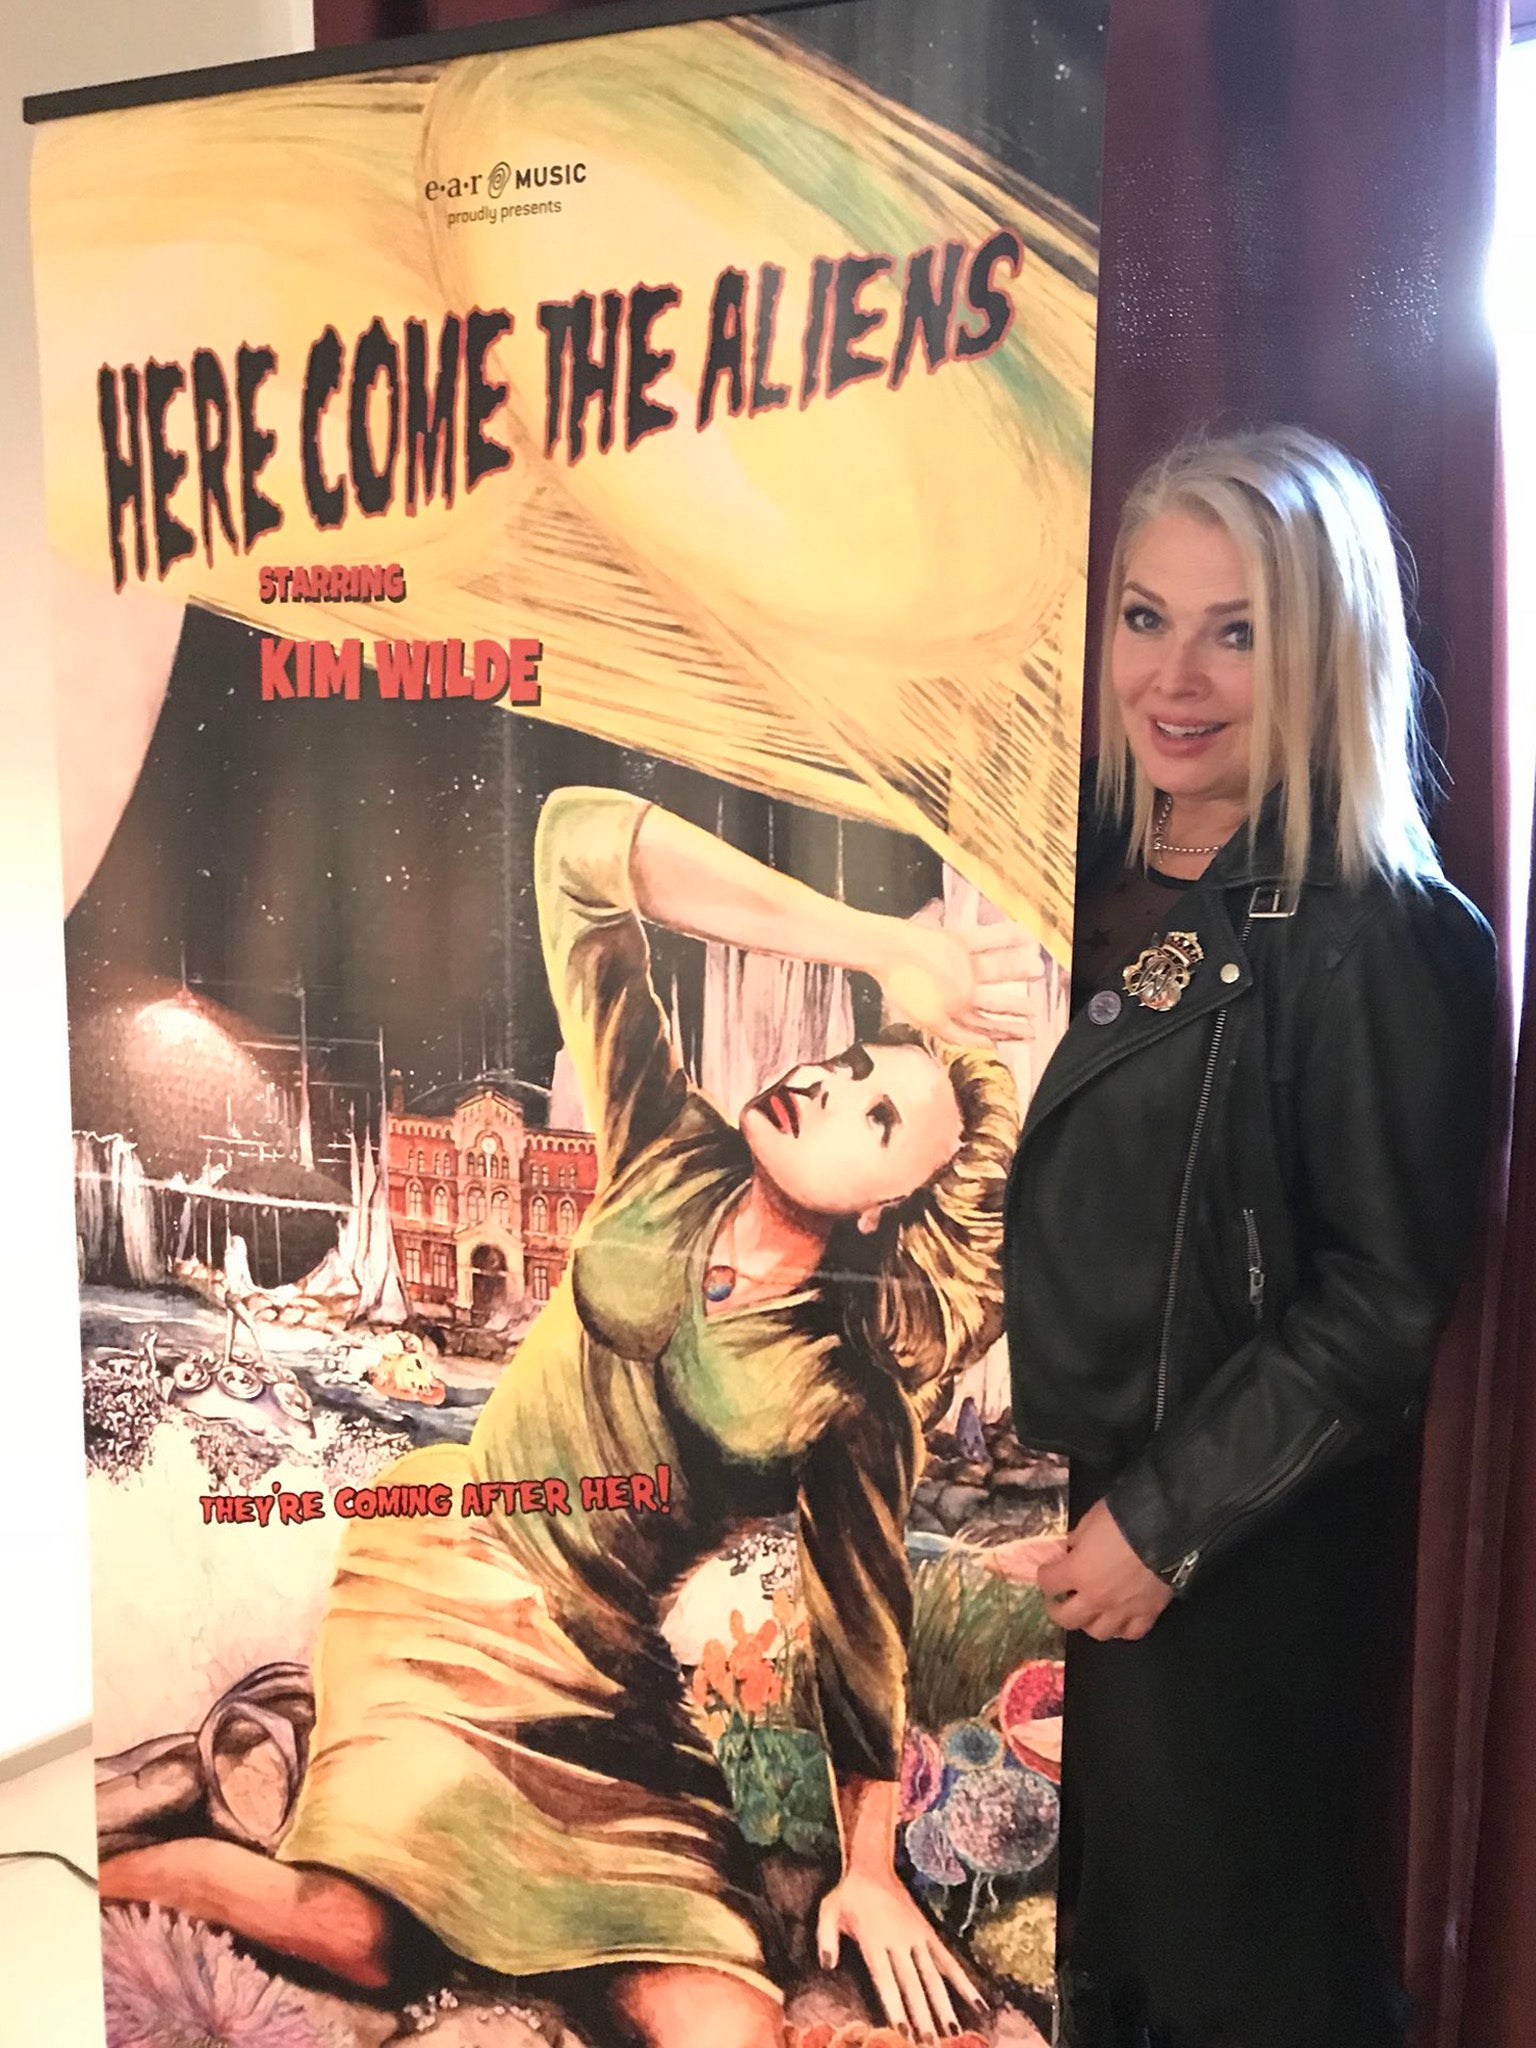 Kim Wilde promotes her new album ‘Here Come the Aliens’